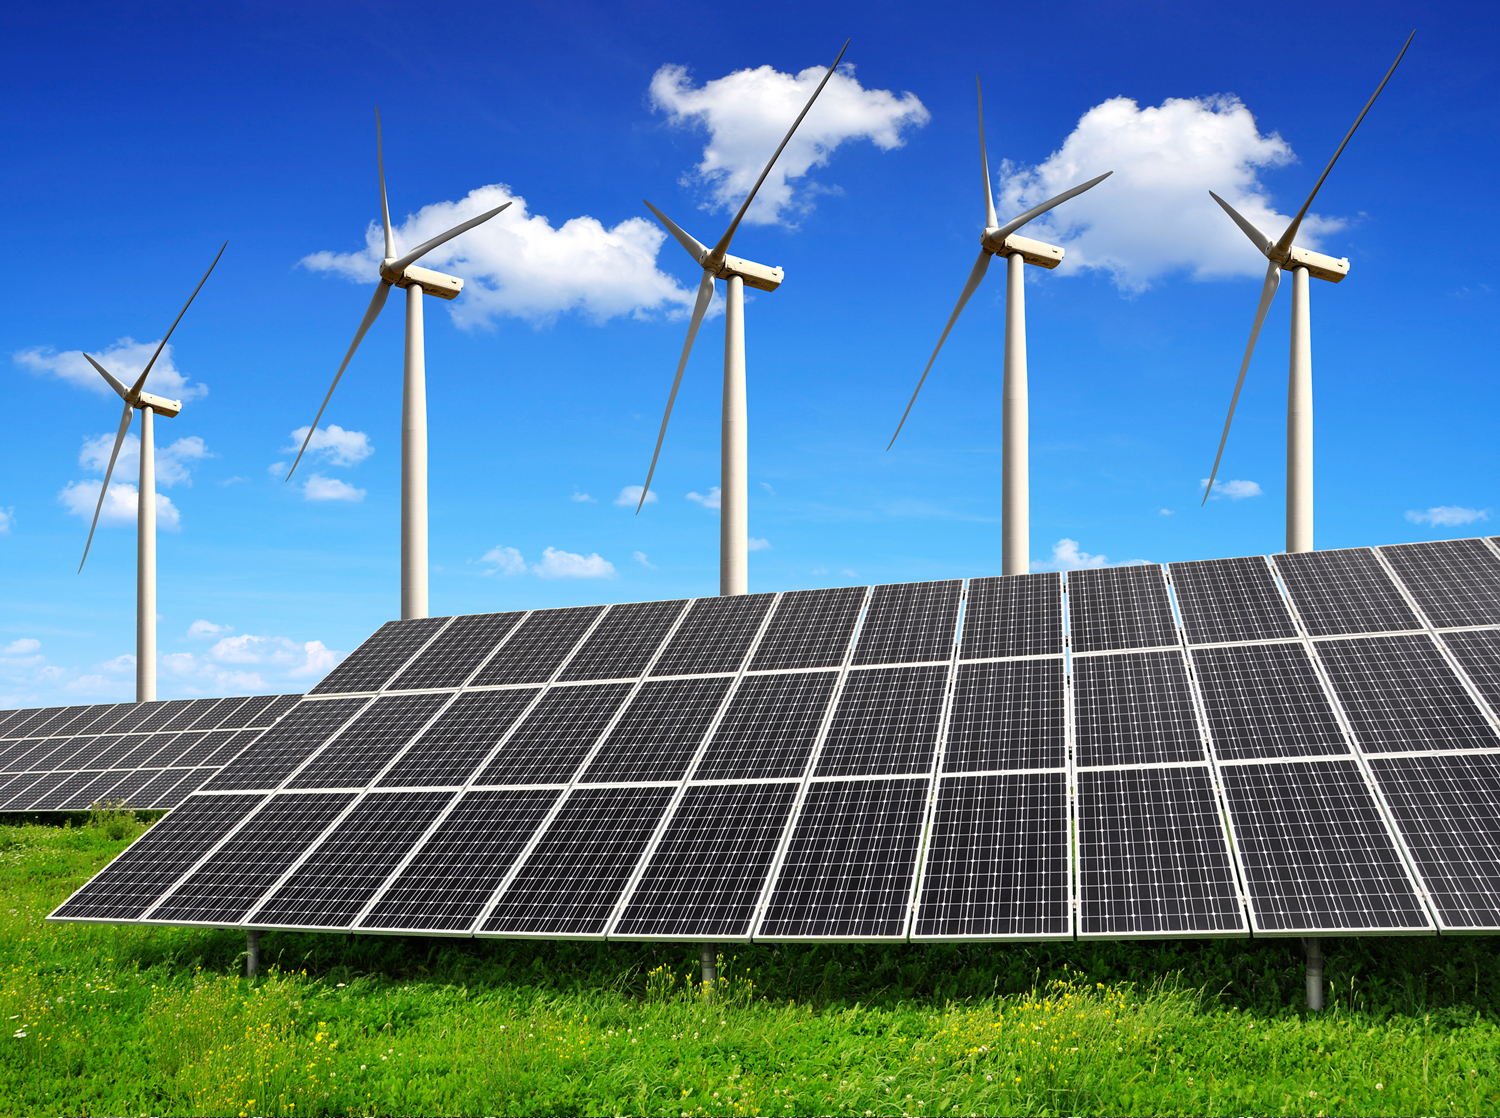 renewable energy project development